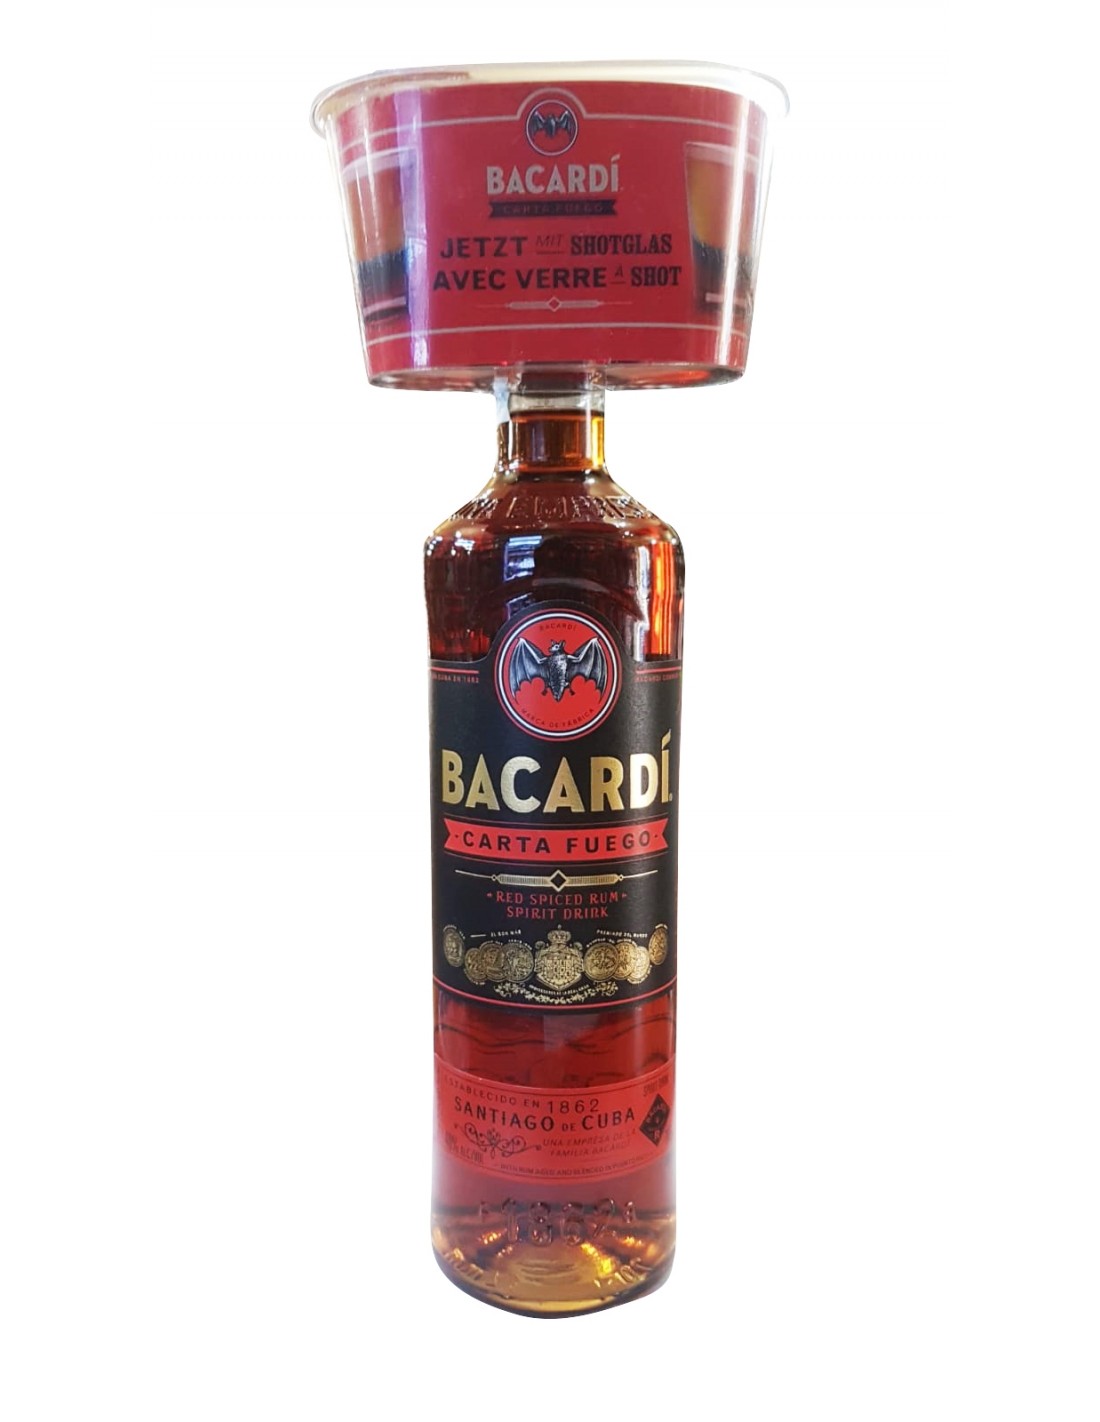 Rom negru Bacardi Carta Fuego + 2 Pahare, 40% alc., 0.7L, Cuba alcooldiscount.ro